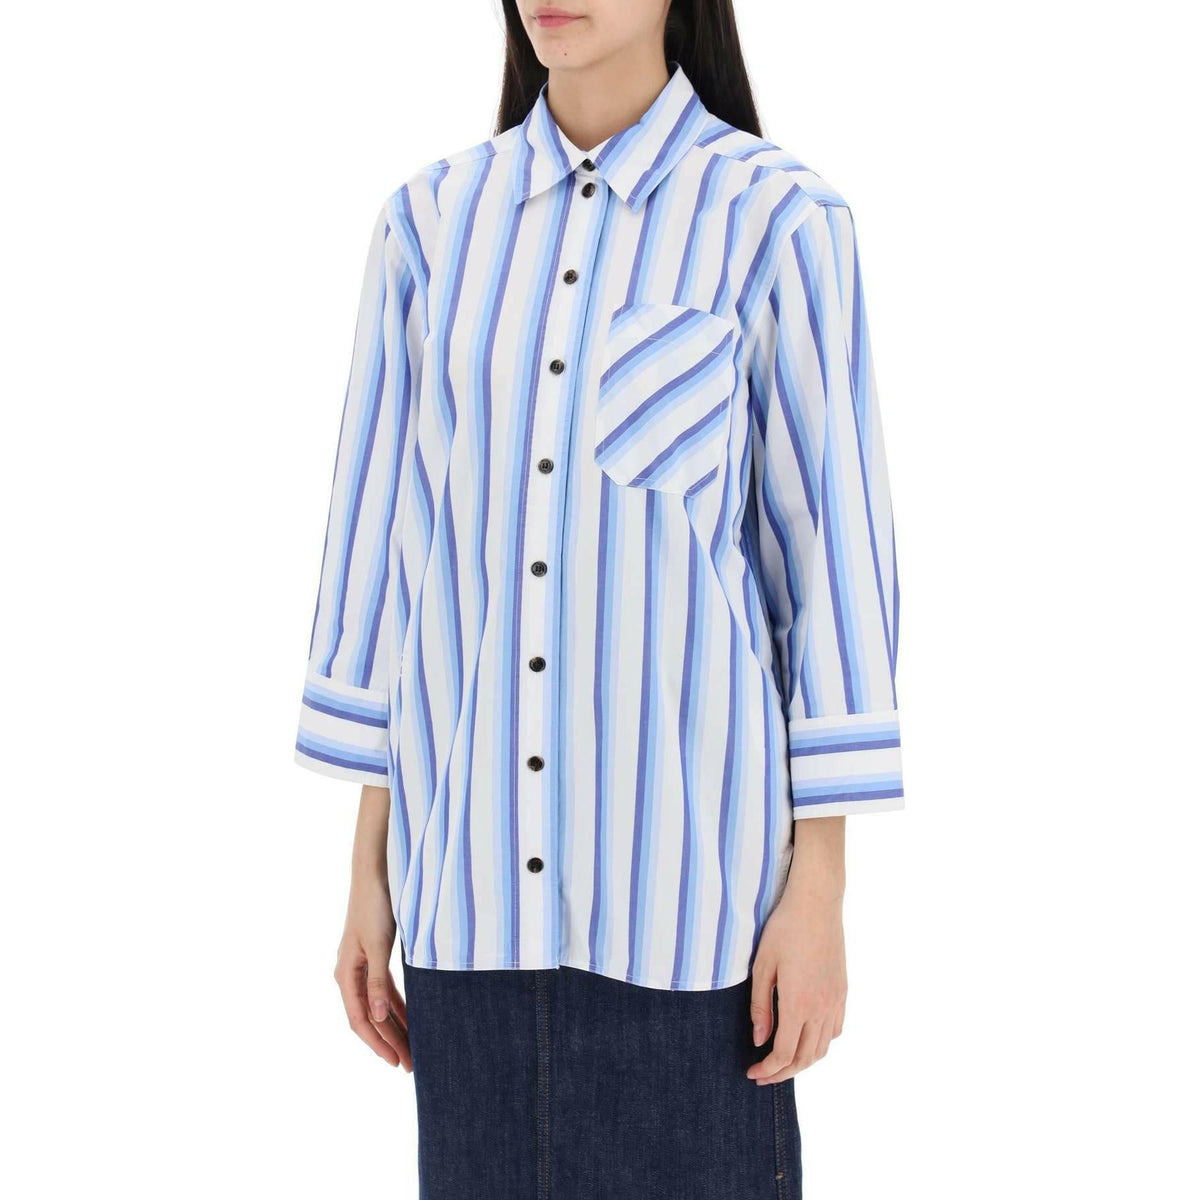 Blue Striped Organic Cotton Overshirt Shirt GANNI JOHN JULIA.